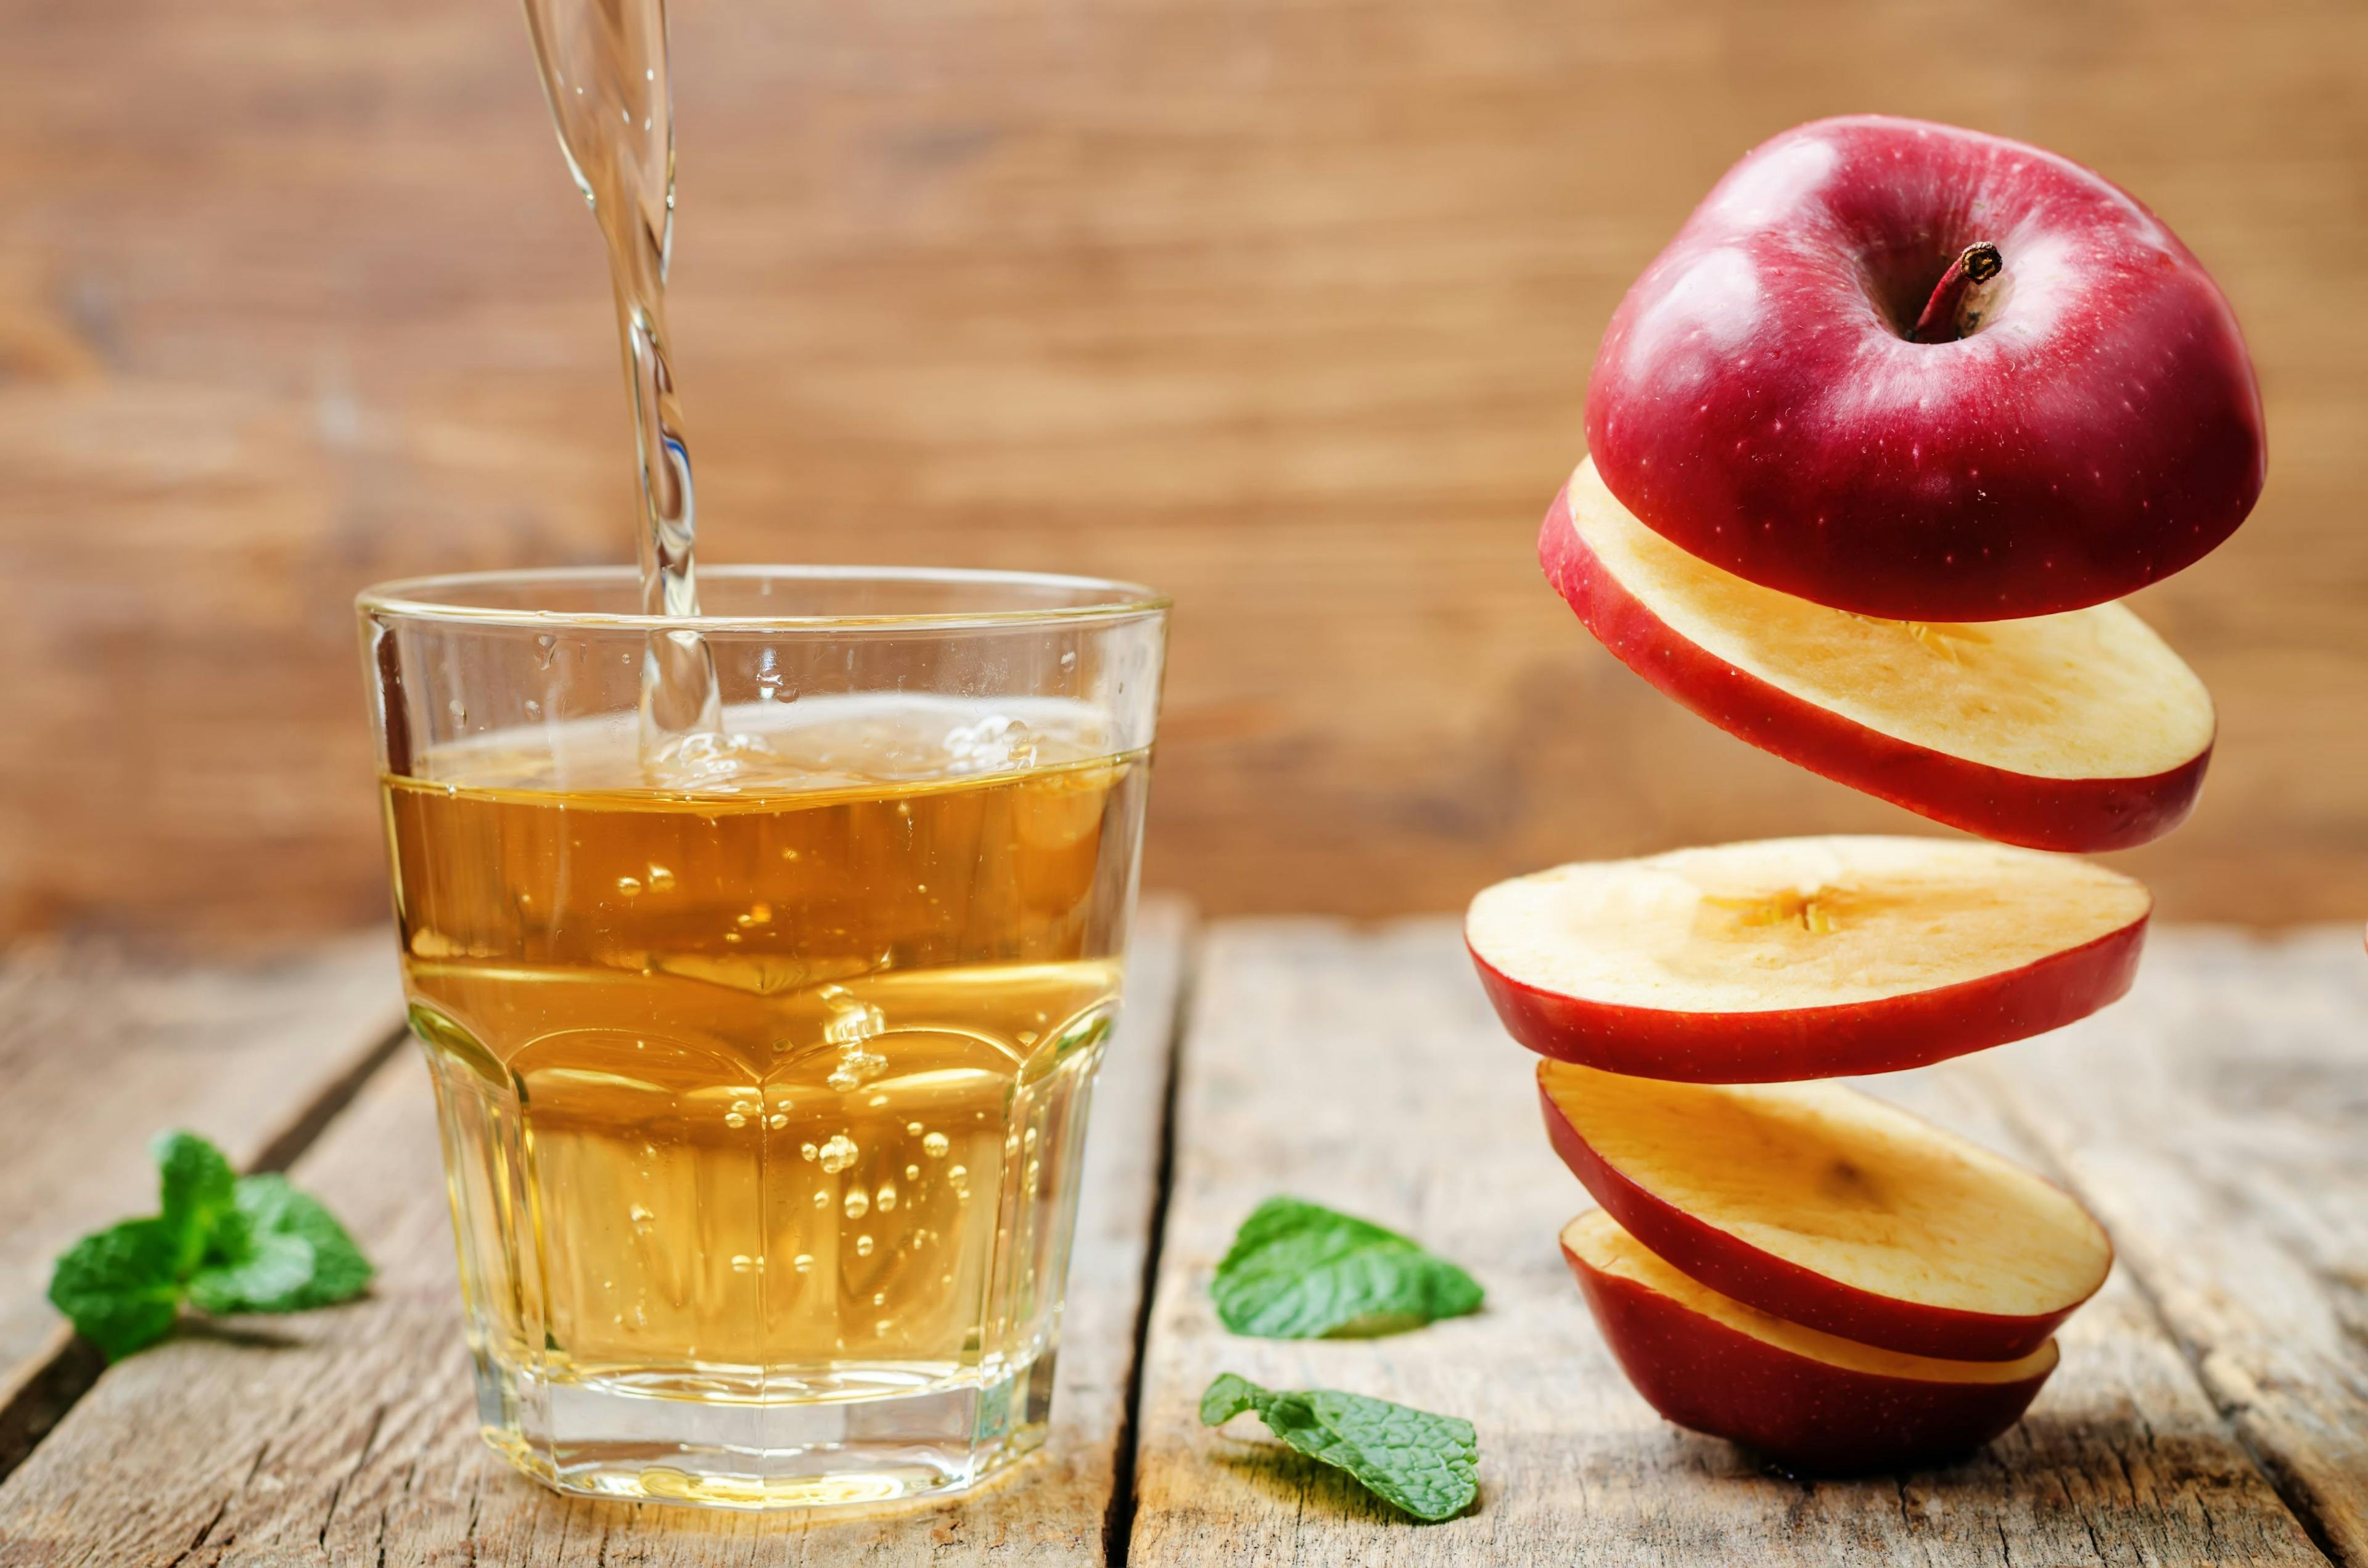 flying slices of apple and apple juice | Image Credit: © nata_vkusidey - stock.adobe.com